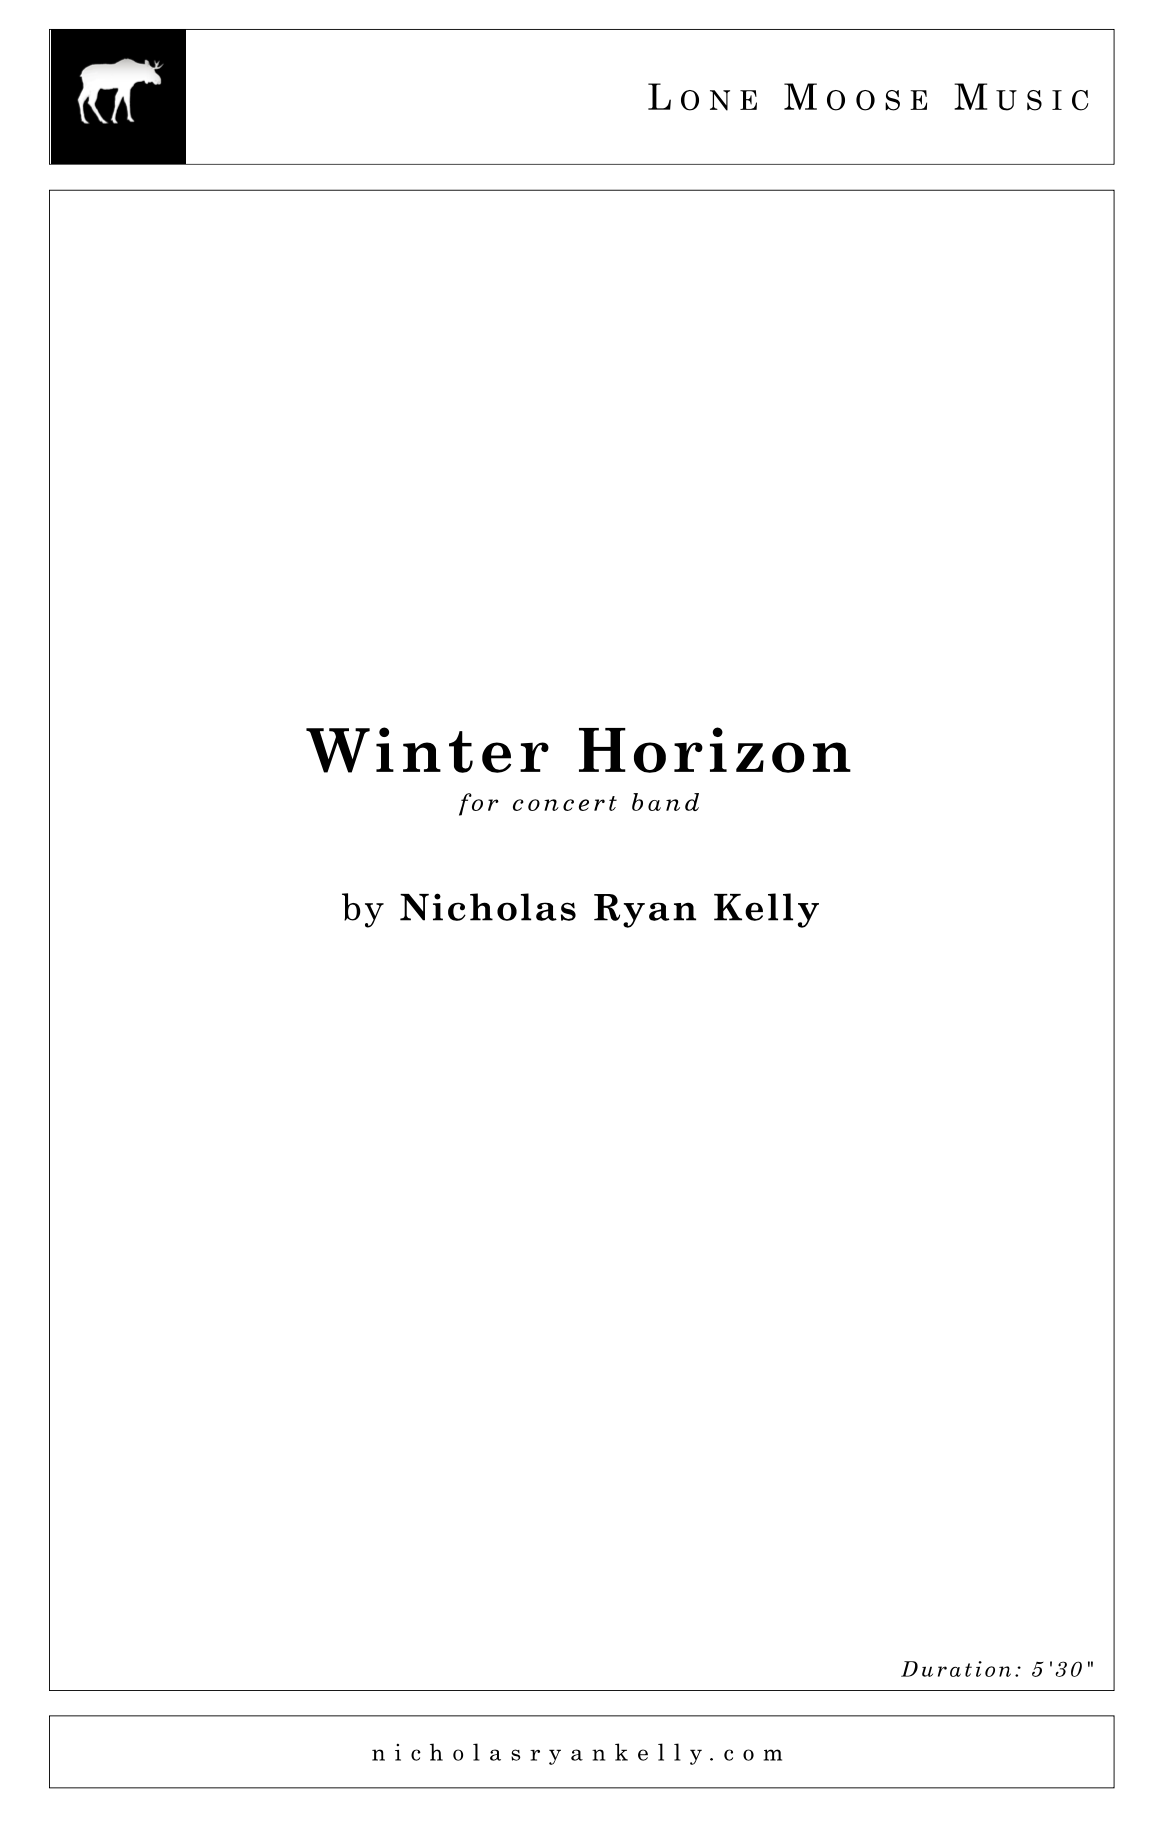 Winter Horizon by Nicholas Ryan Kelly